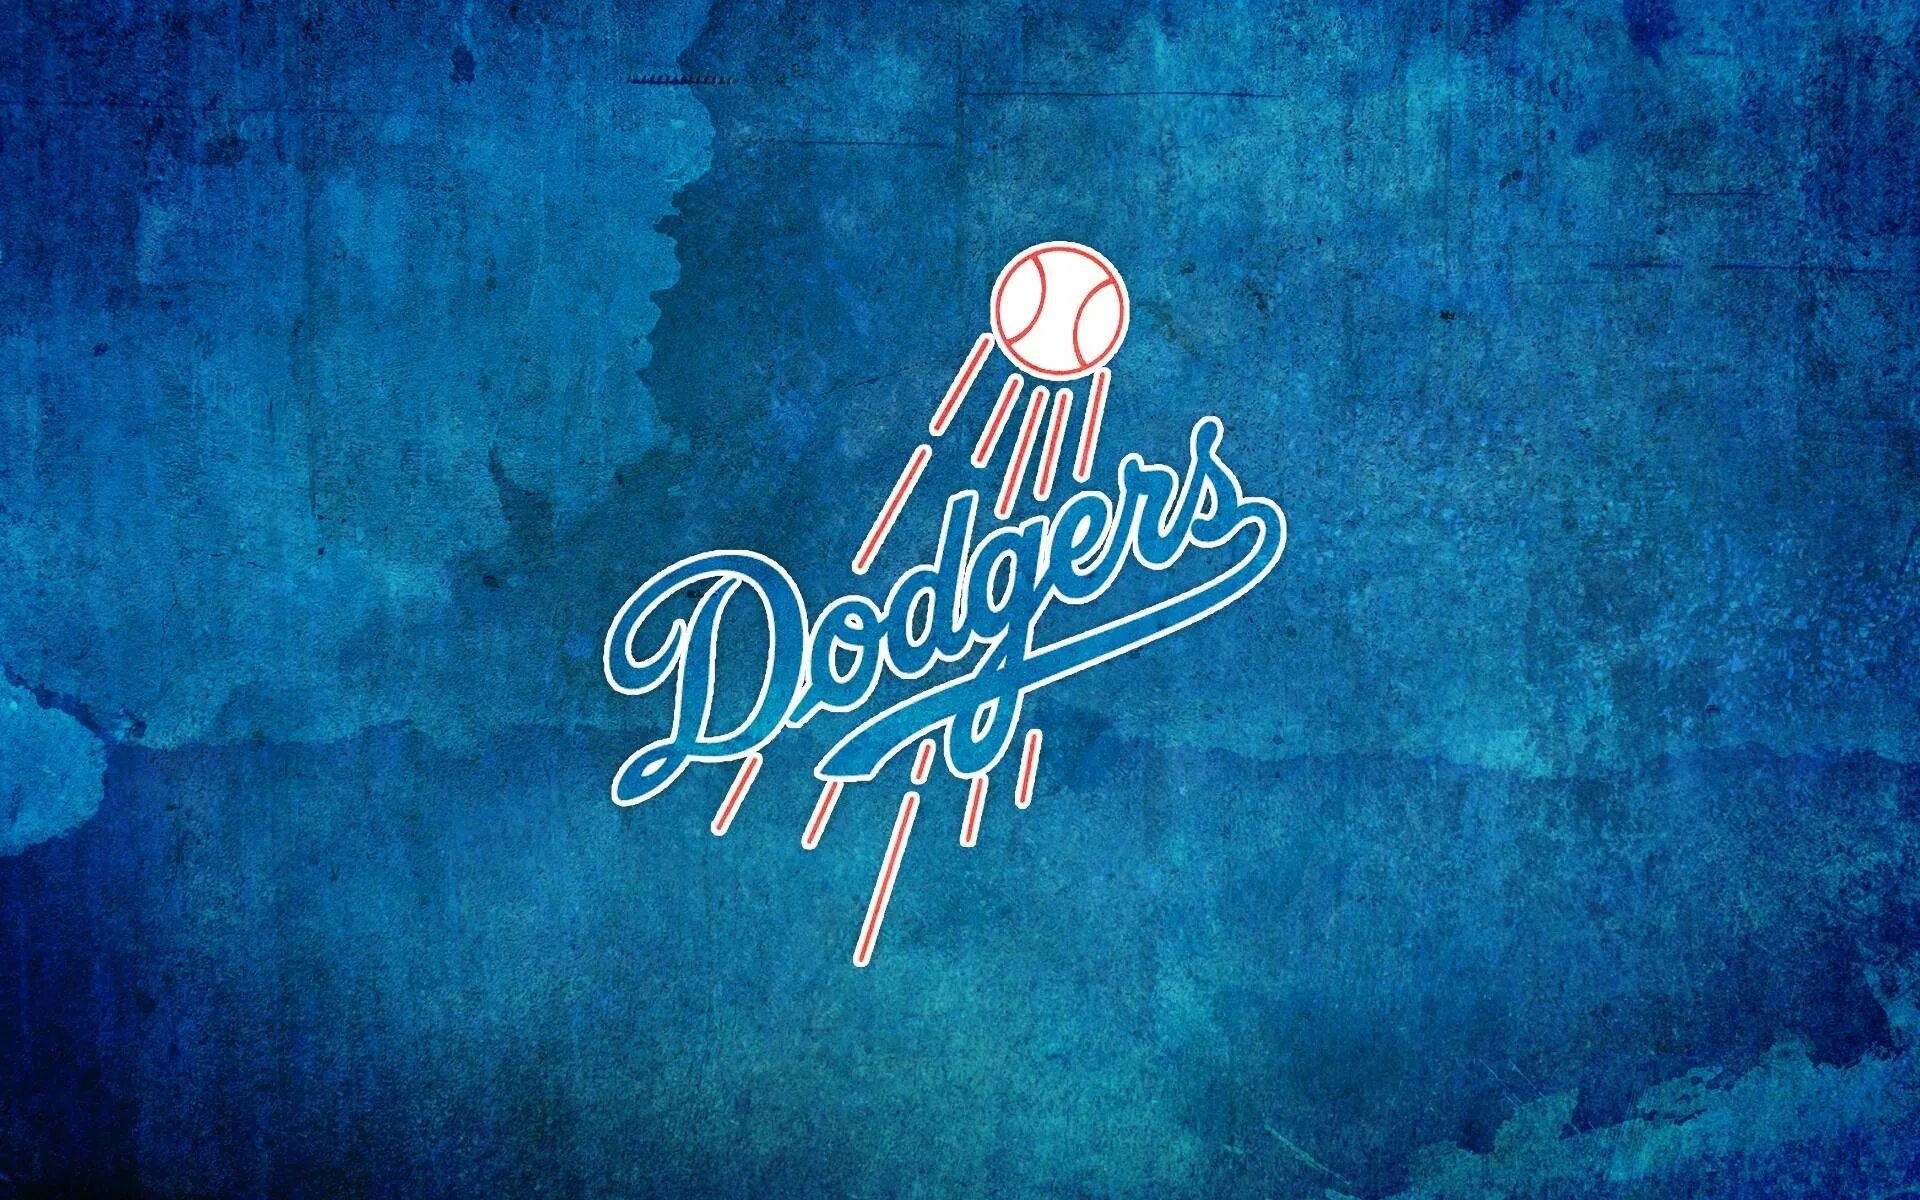 Los angeles dodgers. Лос-Анджелес Доджерс. La Dodgers logo. Dodgers команда. La бейсбольная команда.